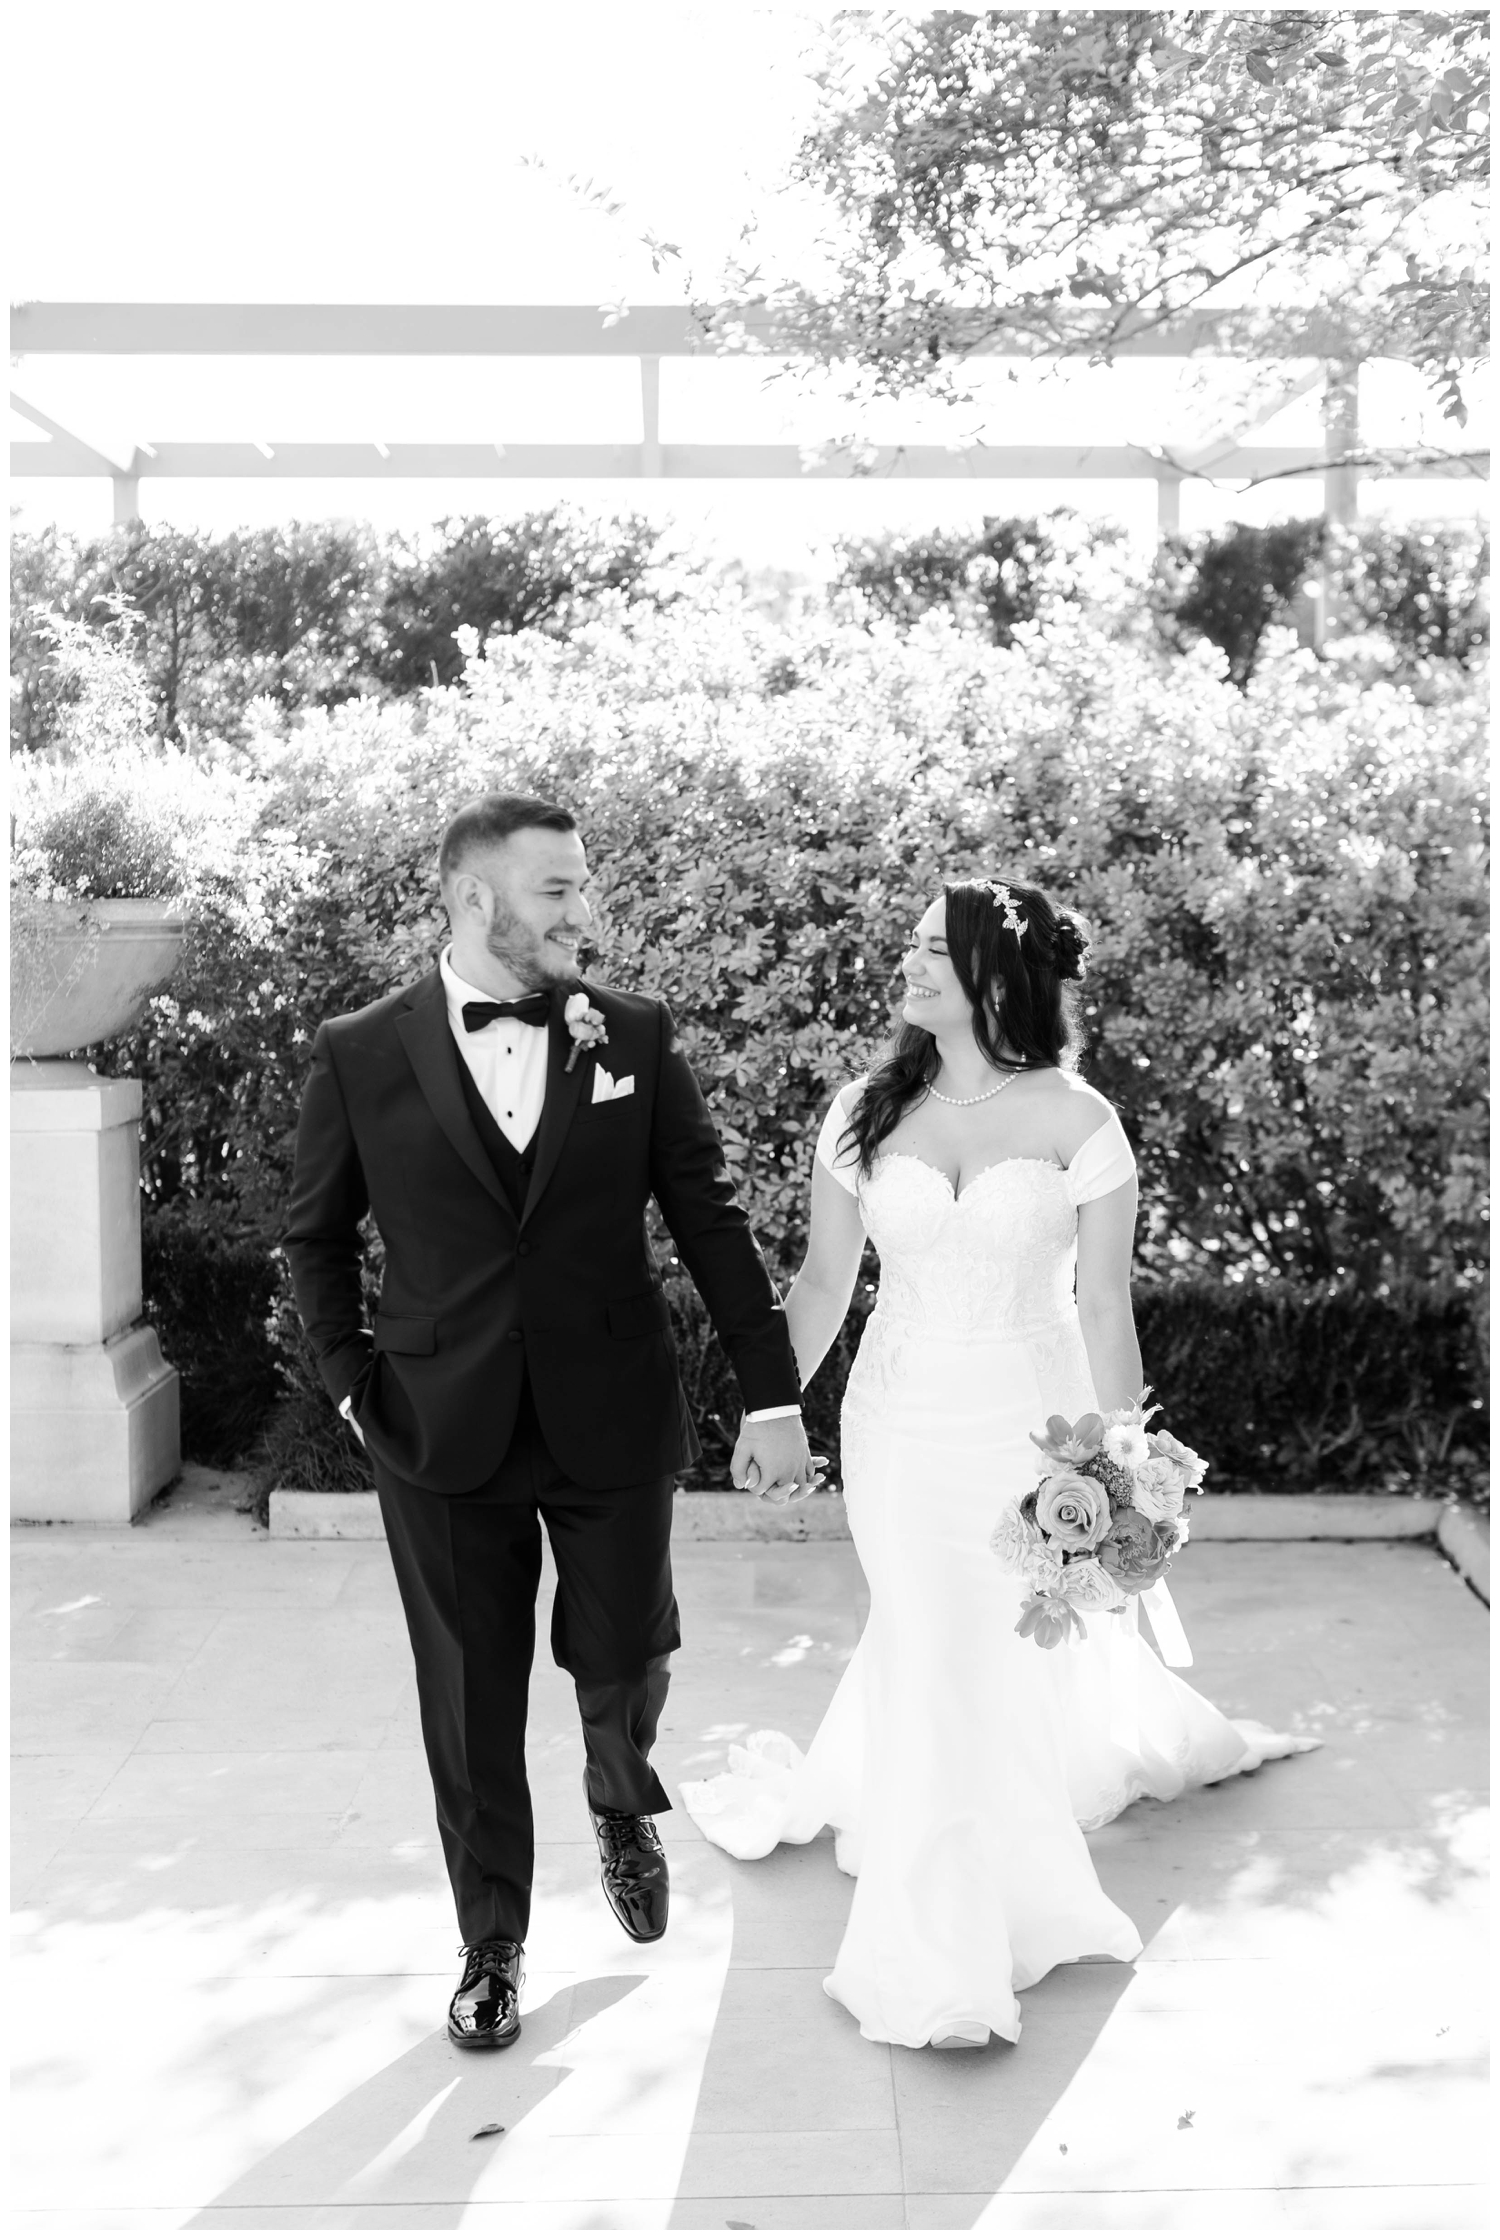 McGovern Centennial Gardens Wedding black and white image bride groom holding hands walking